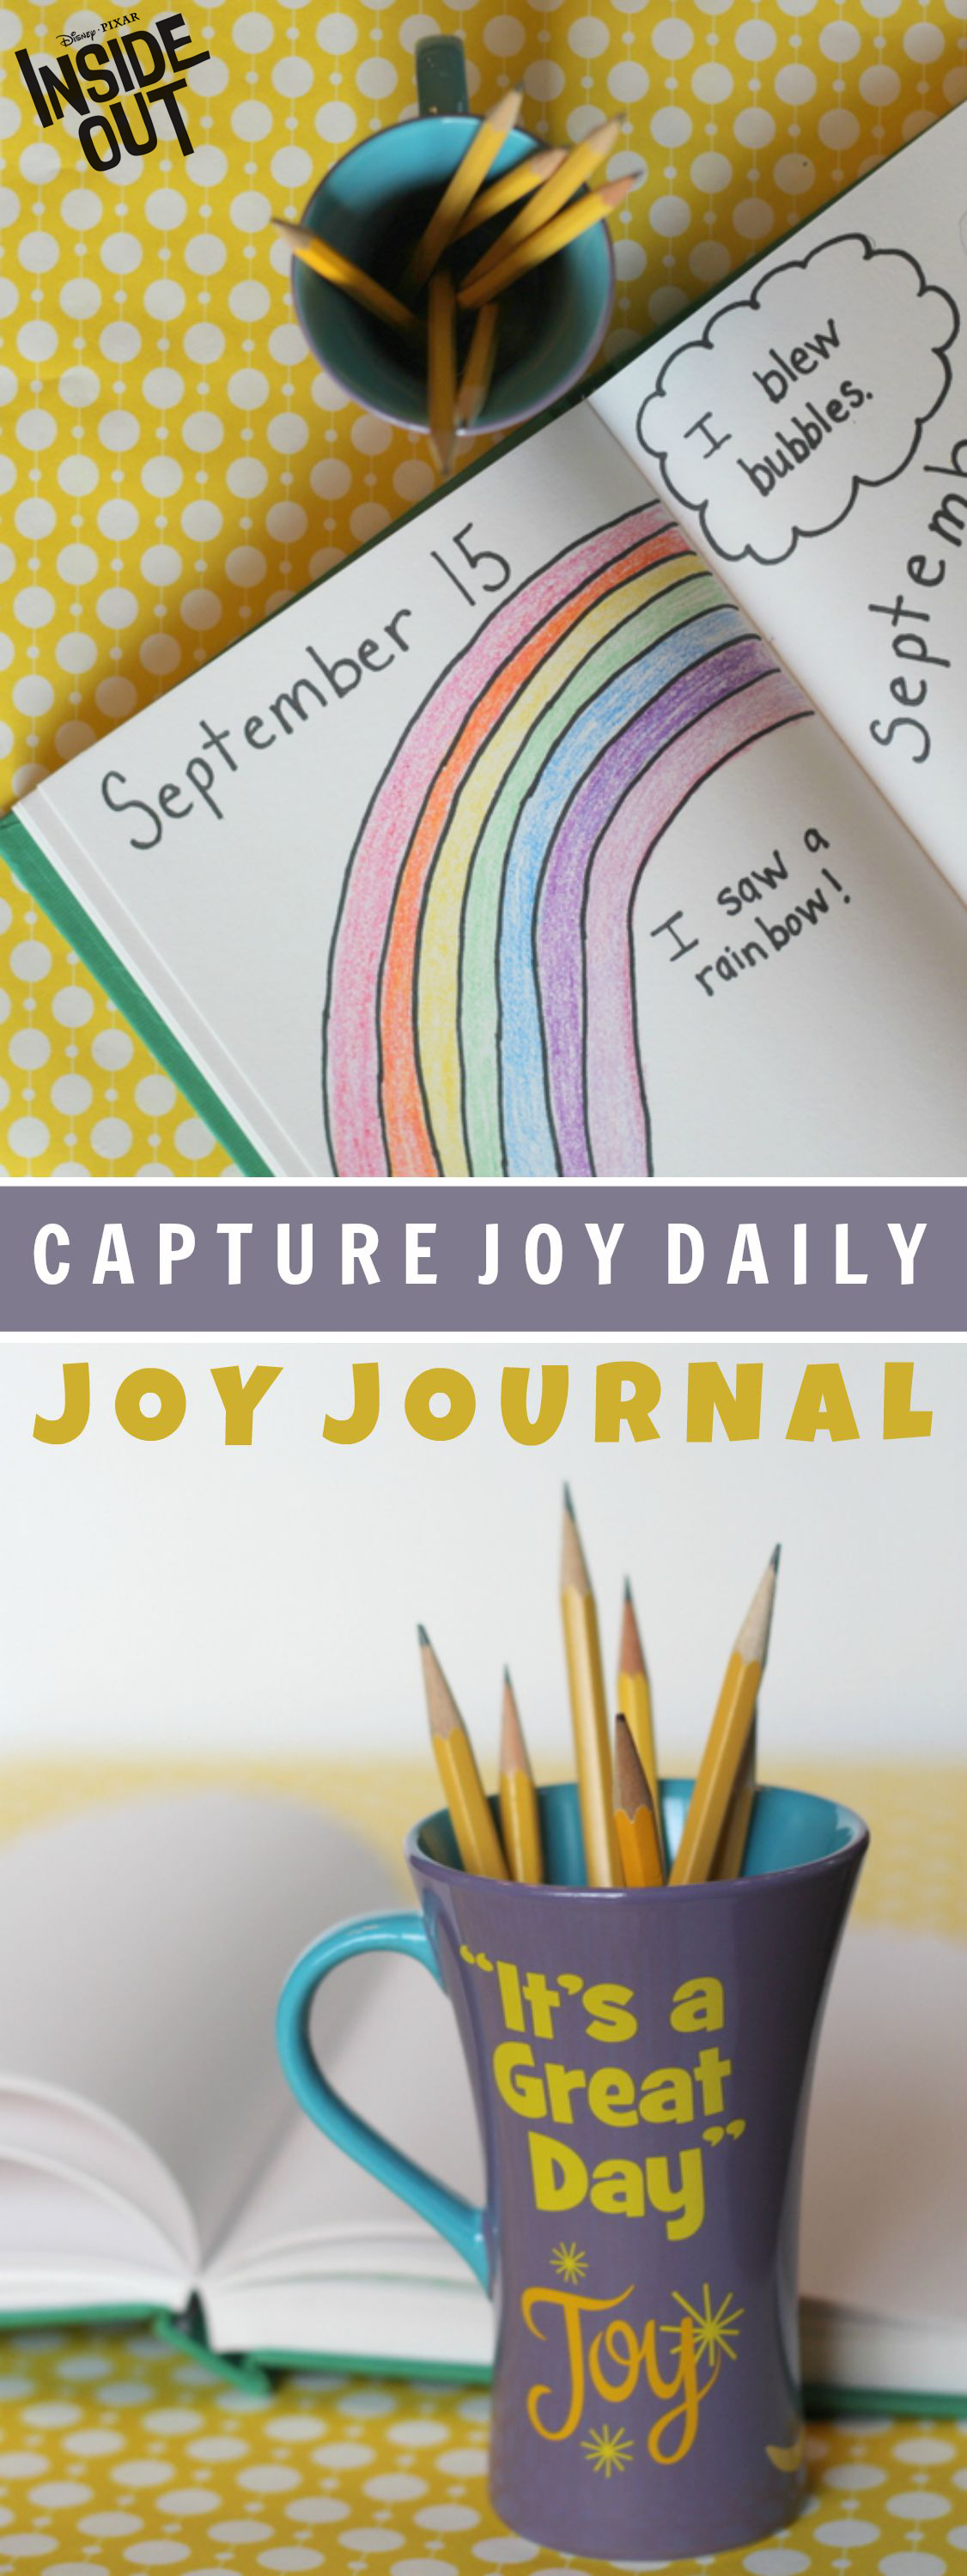 Capture Daily Joy Journal